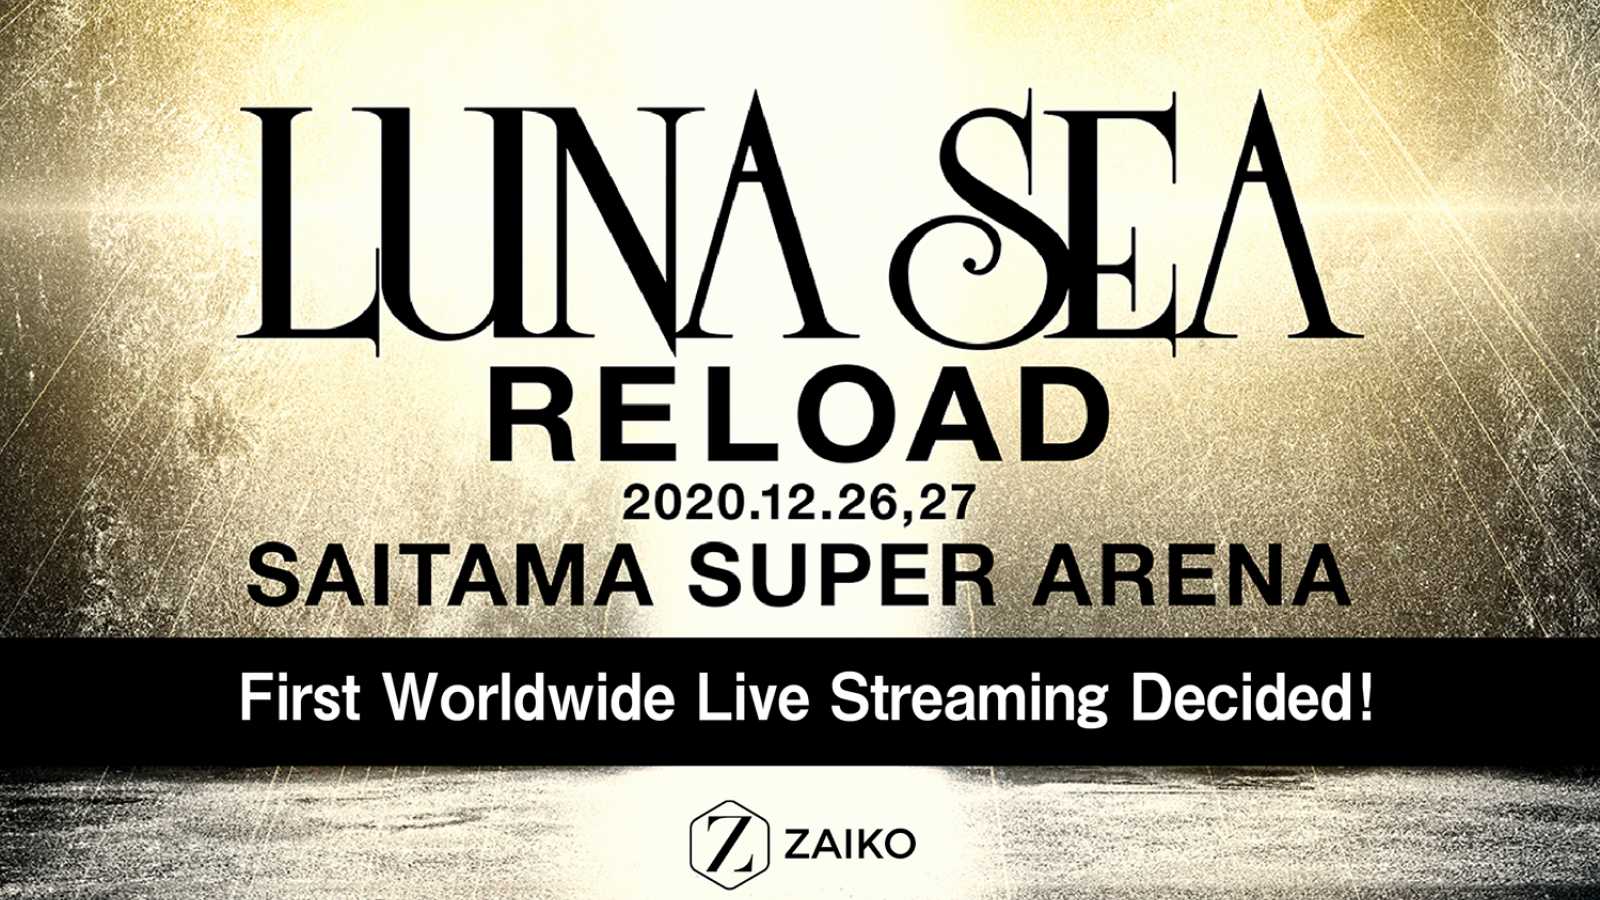 Deux concerts en streaming pour LUNA SEA © LUNA SEA. All rights reserved.